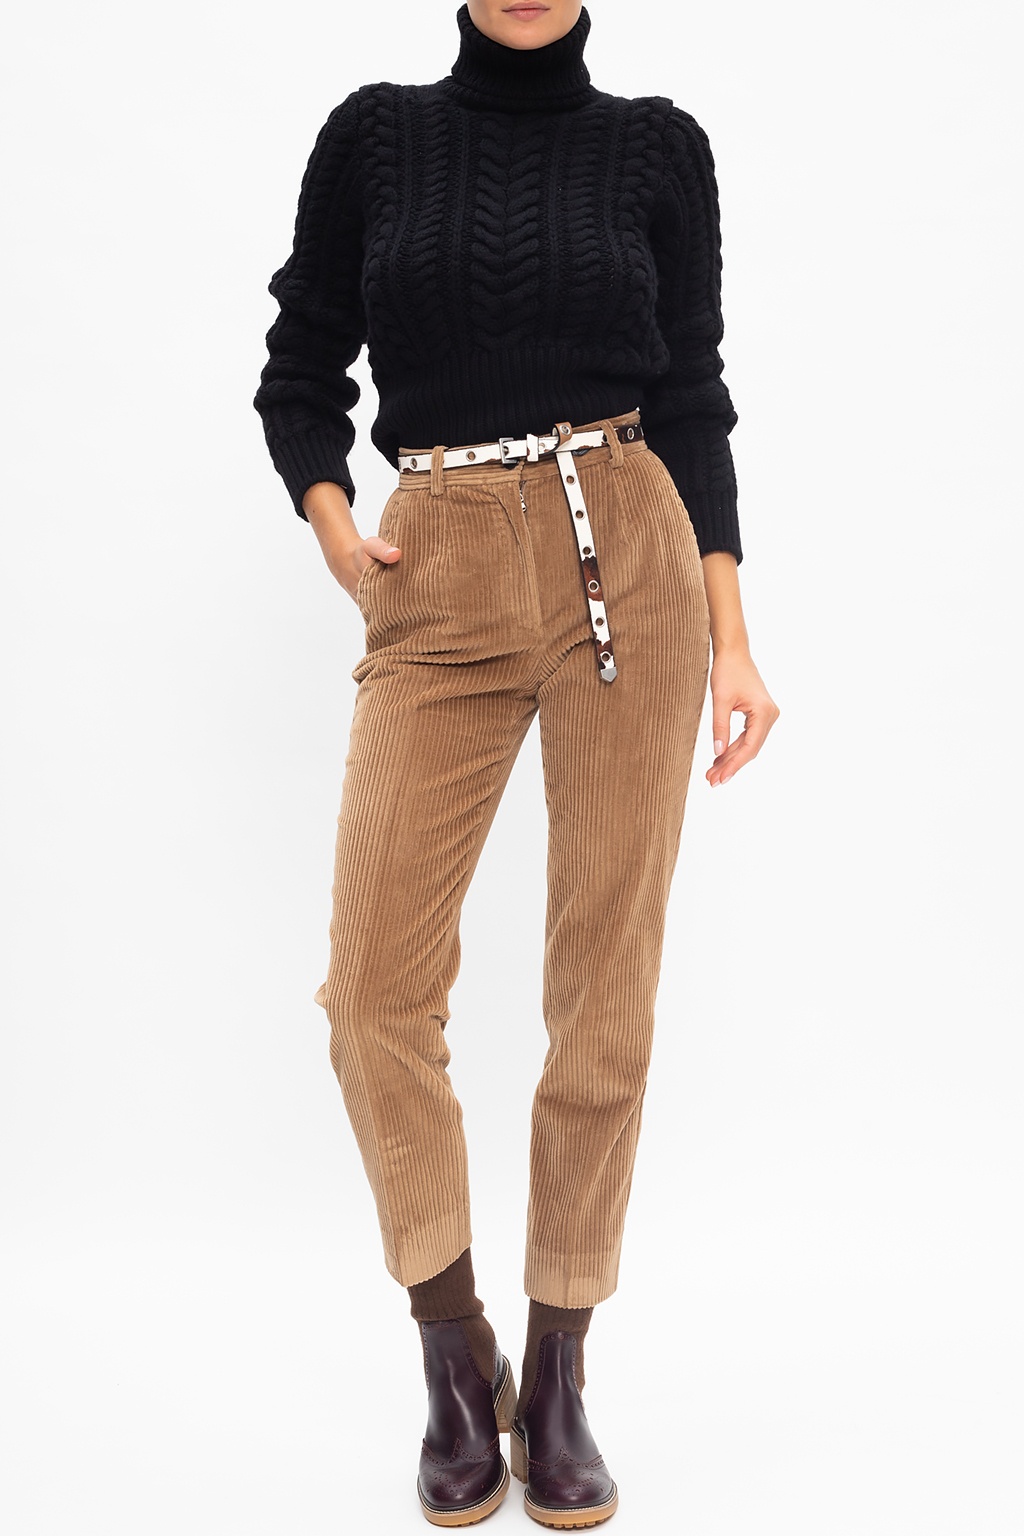 IetpShops | Dolce & Gabbana Cashmere turtleneck sweater | Women's 